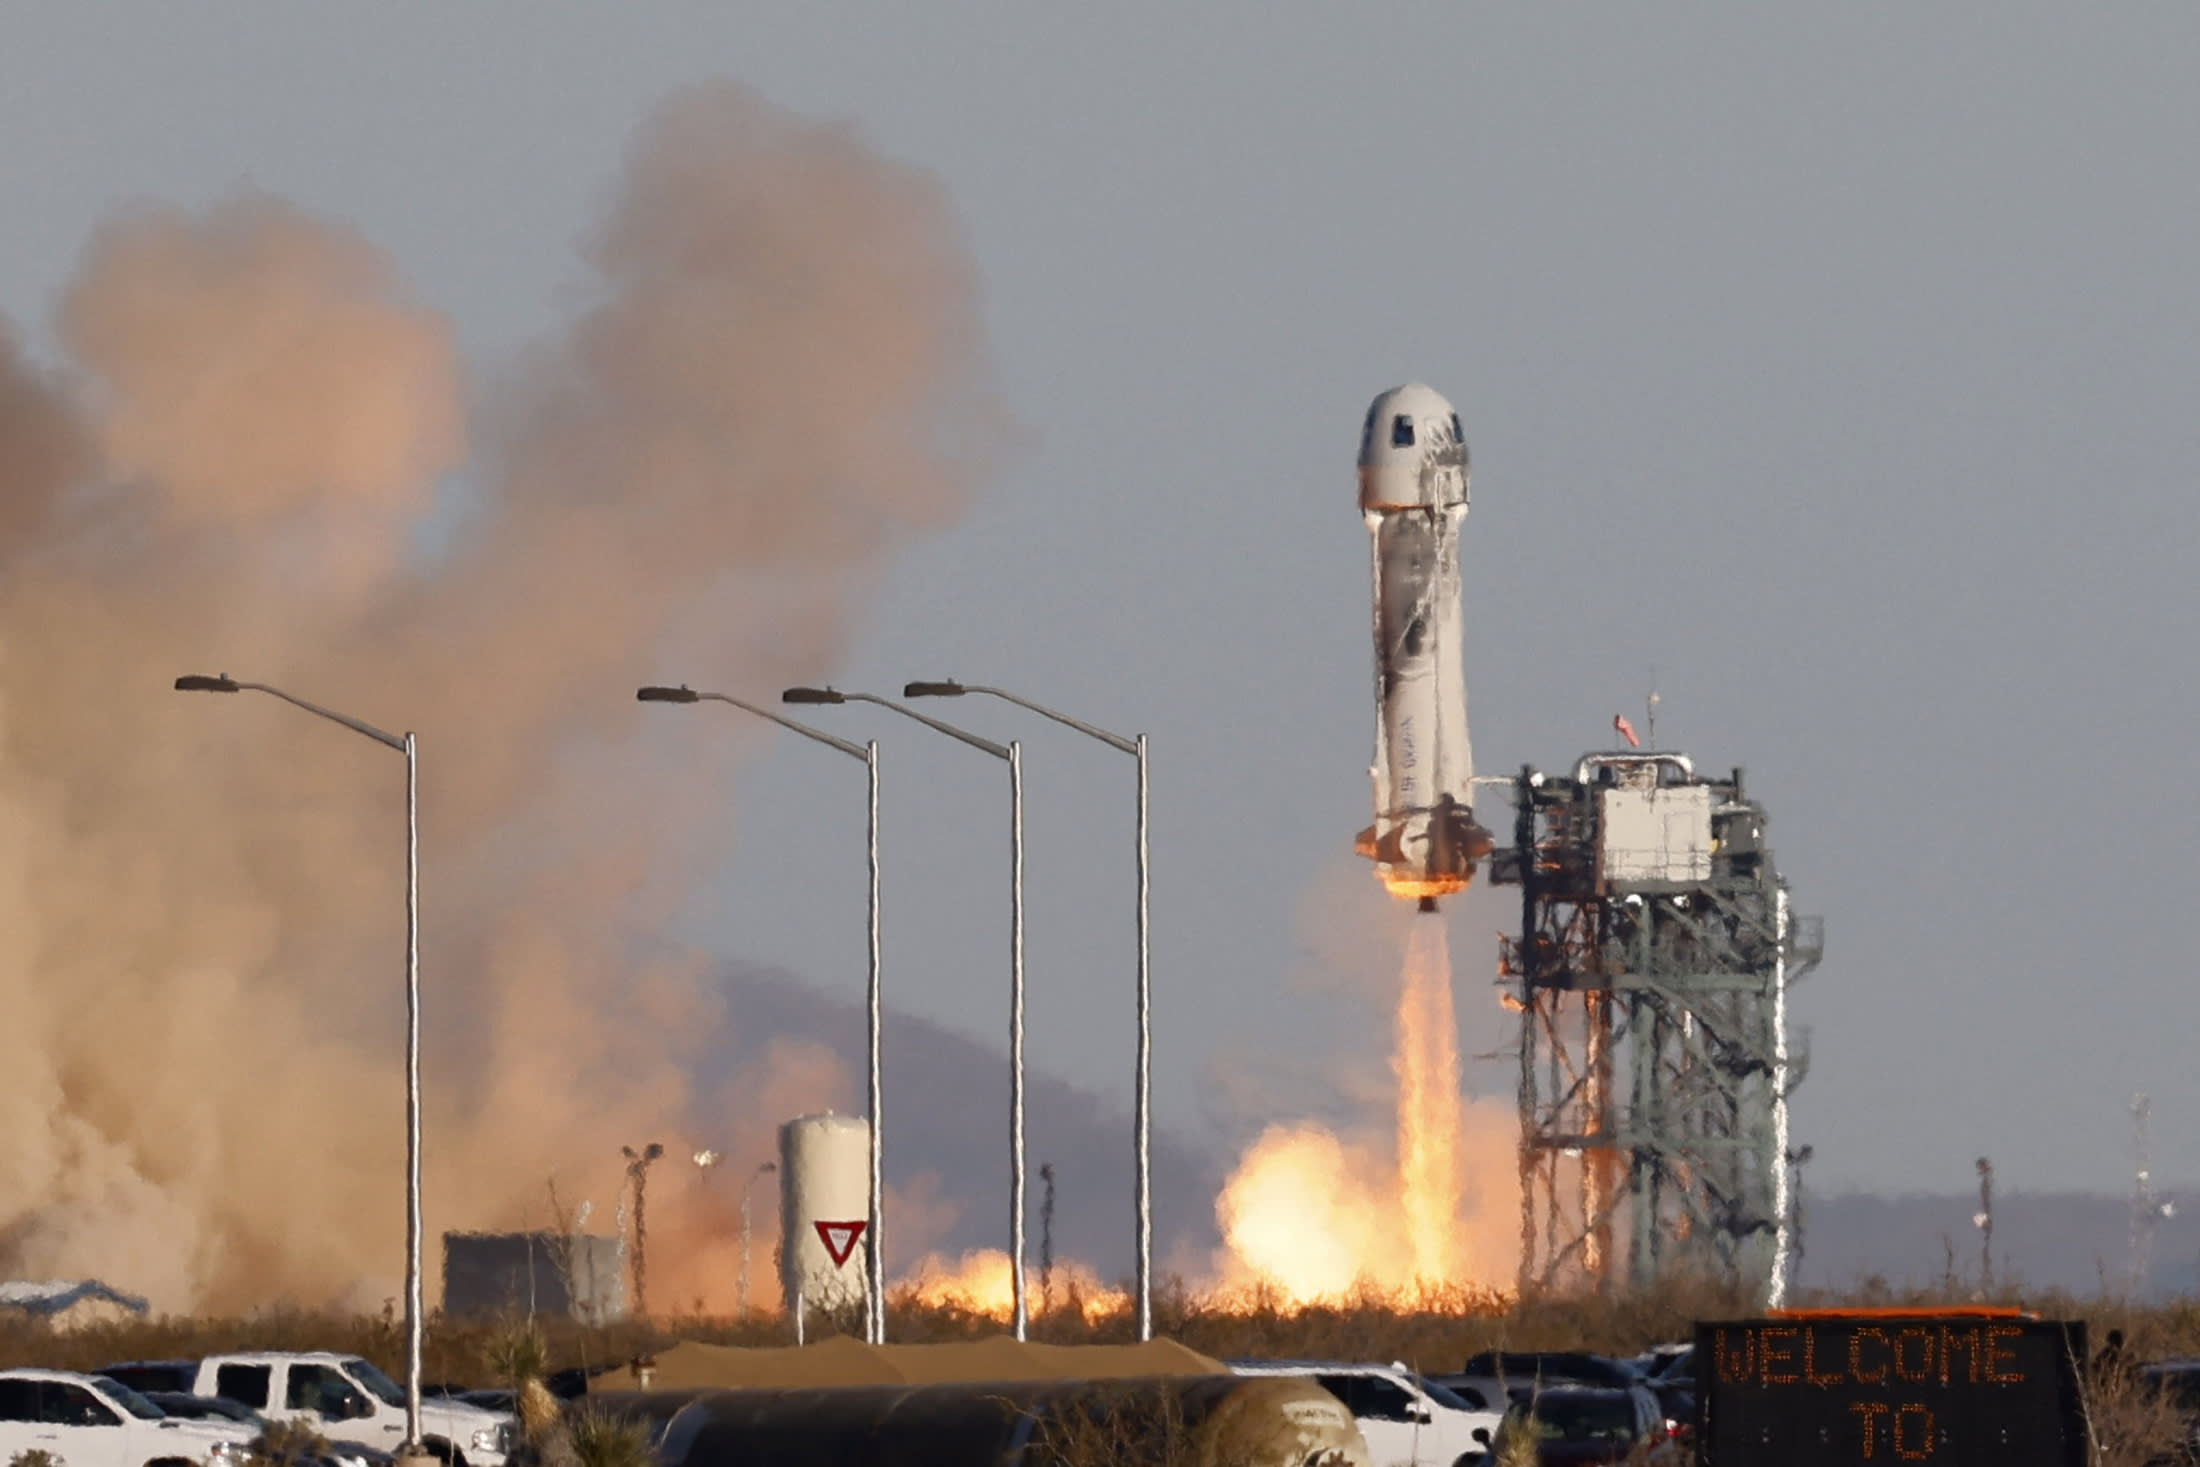 Bezos’ Blue Origin building more space tourism rockets, CEO says